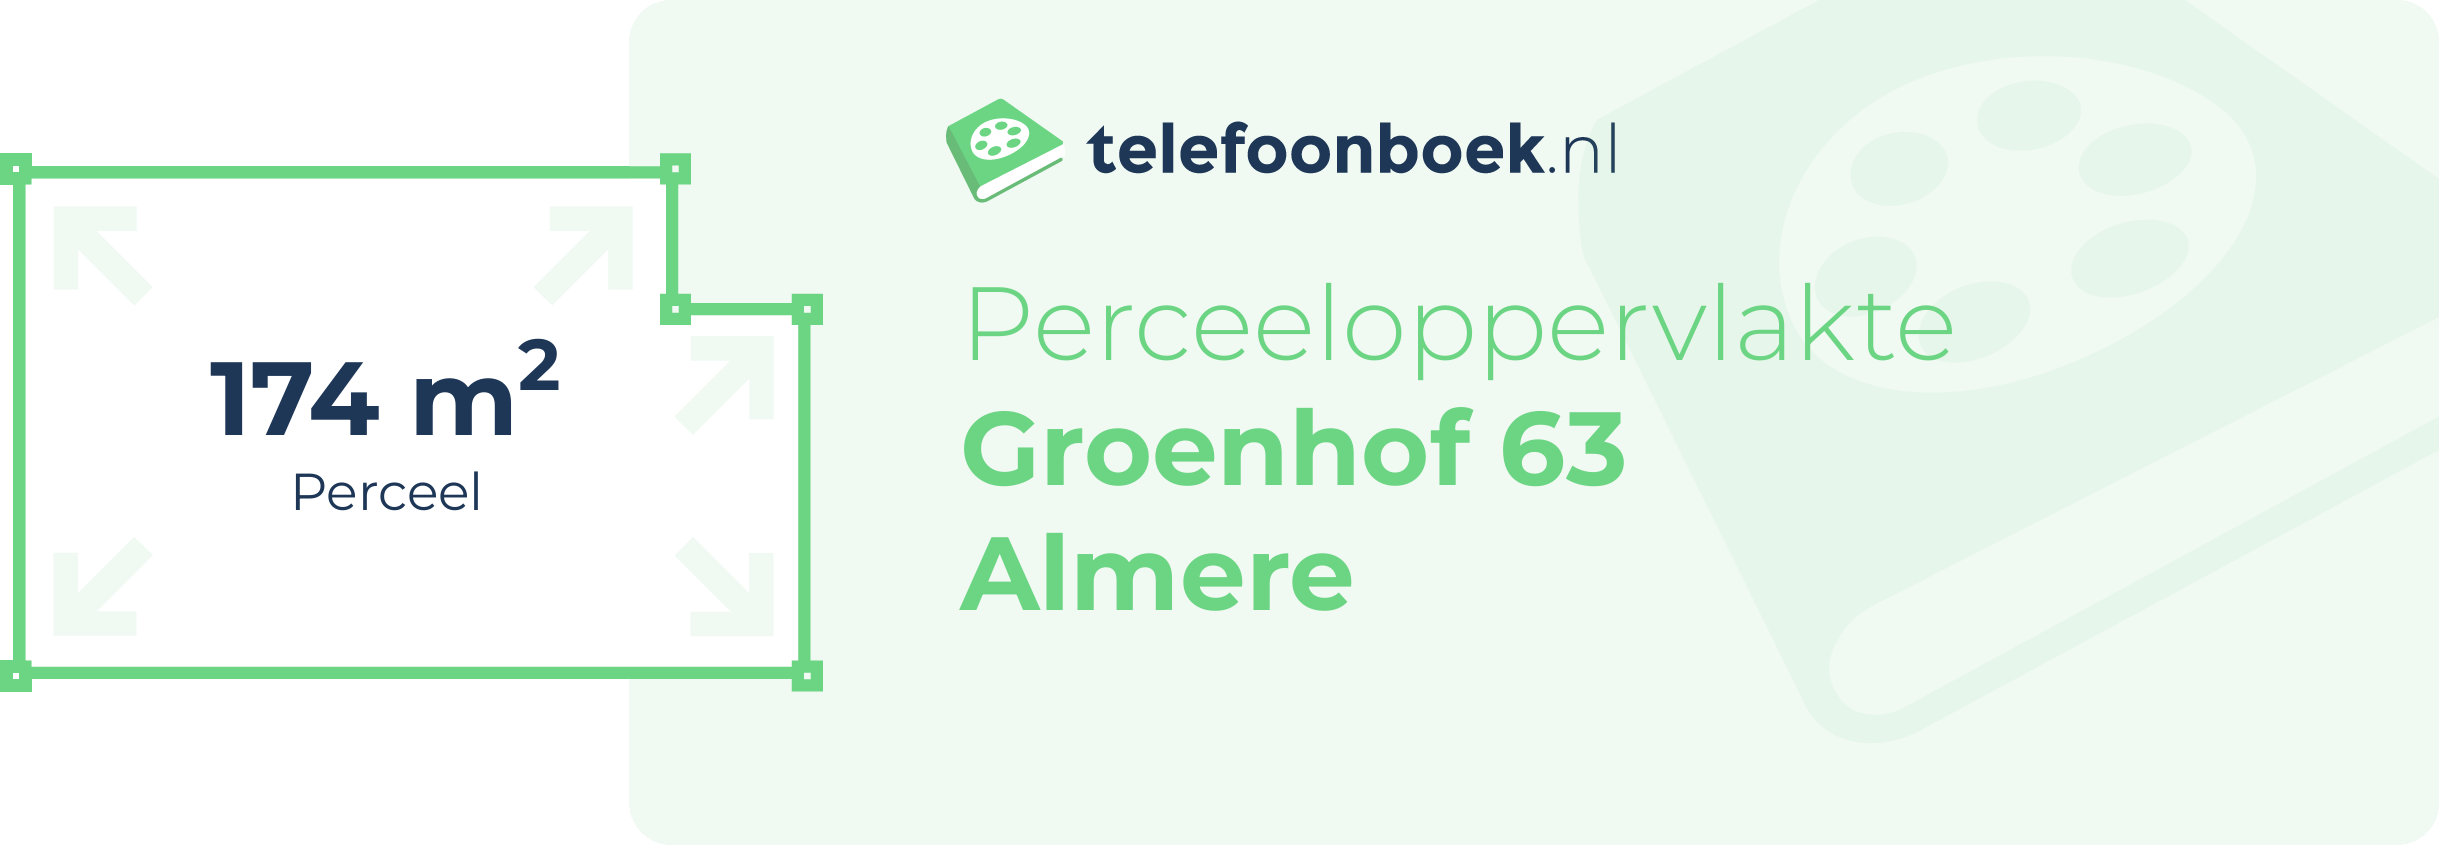 Perceeloppervlakte Groenhof 63 Almere